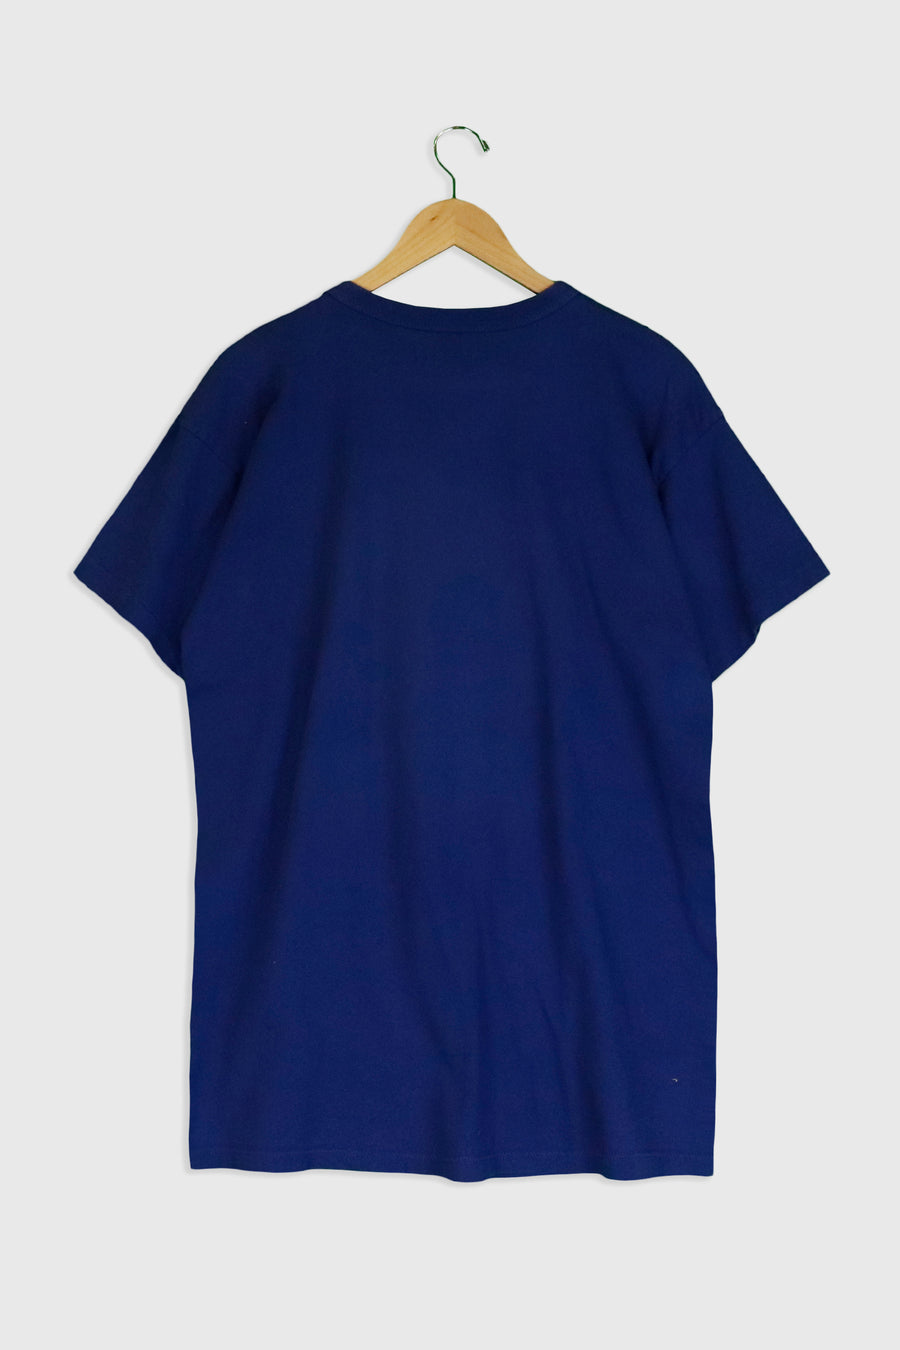 Vintage Champion Toronto Bluejays T Shirt Sz XL